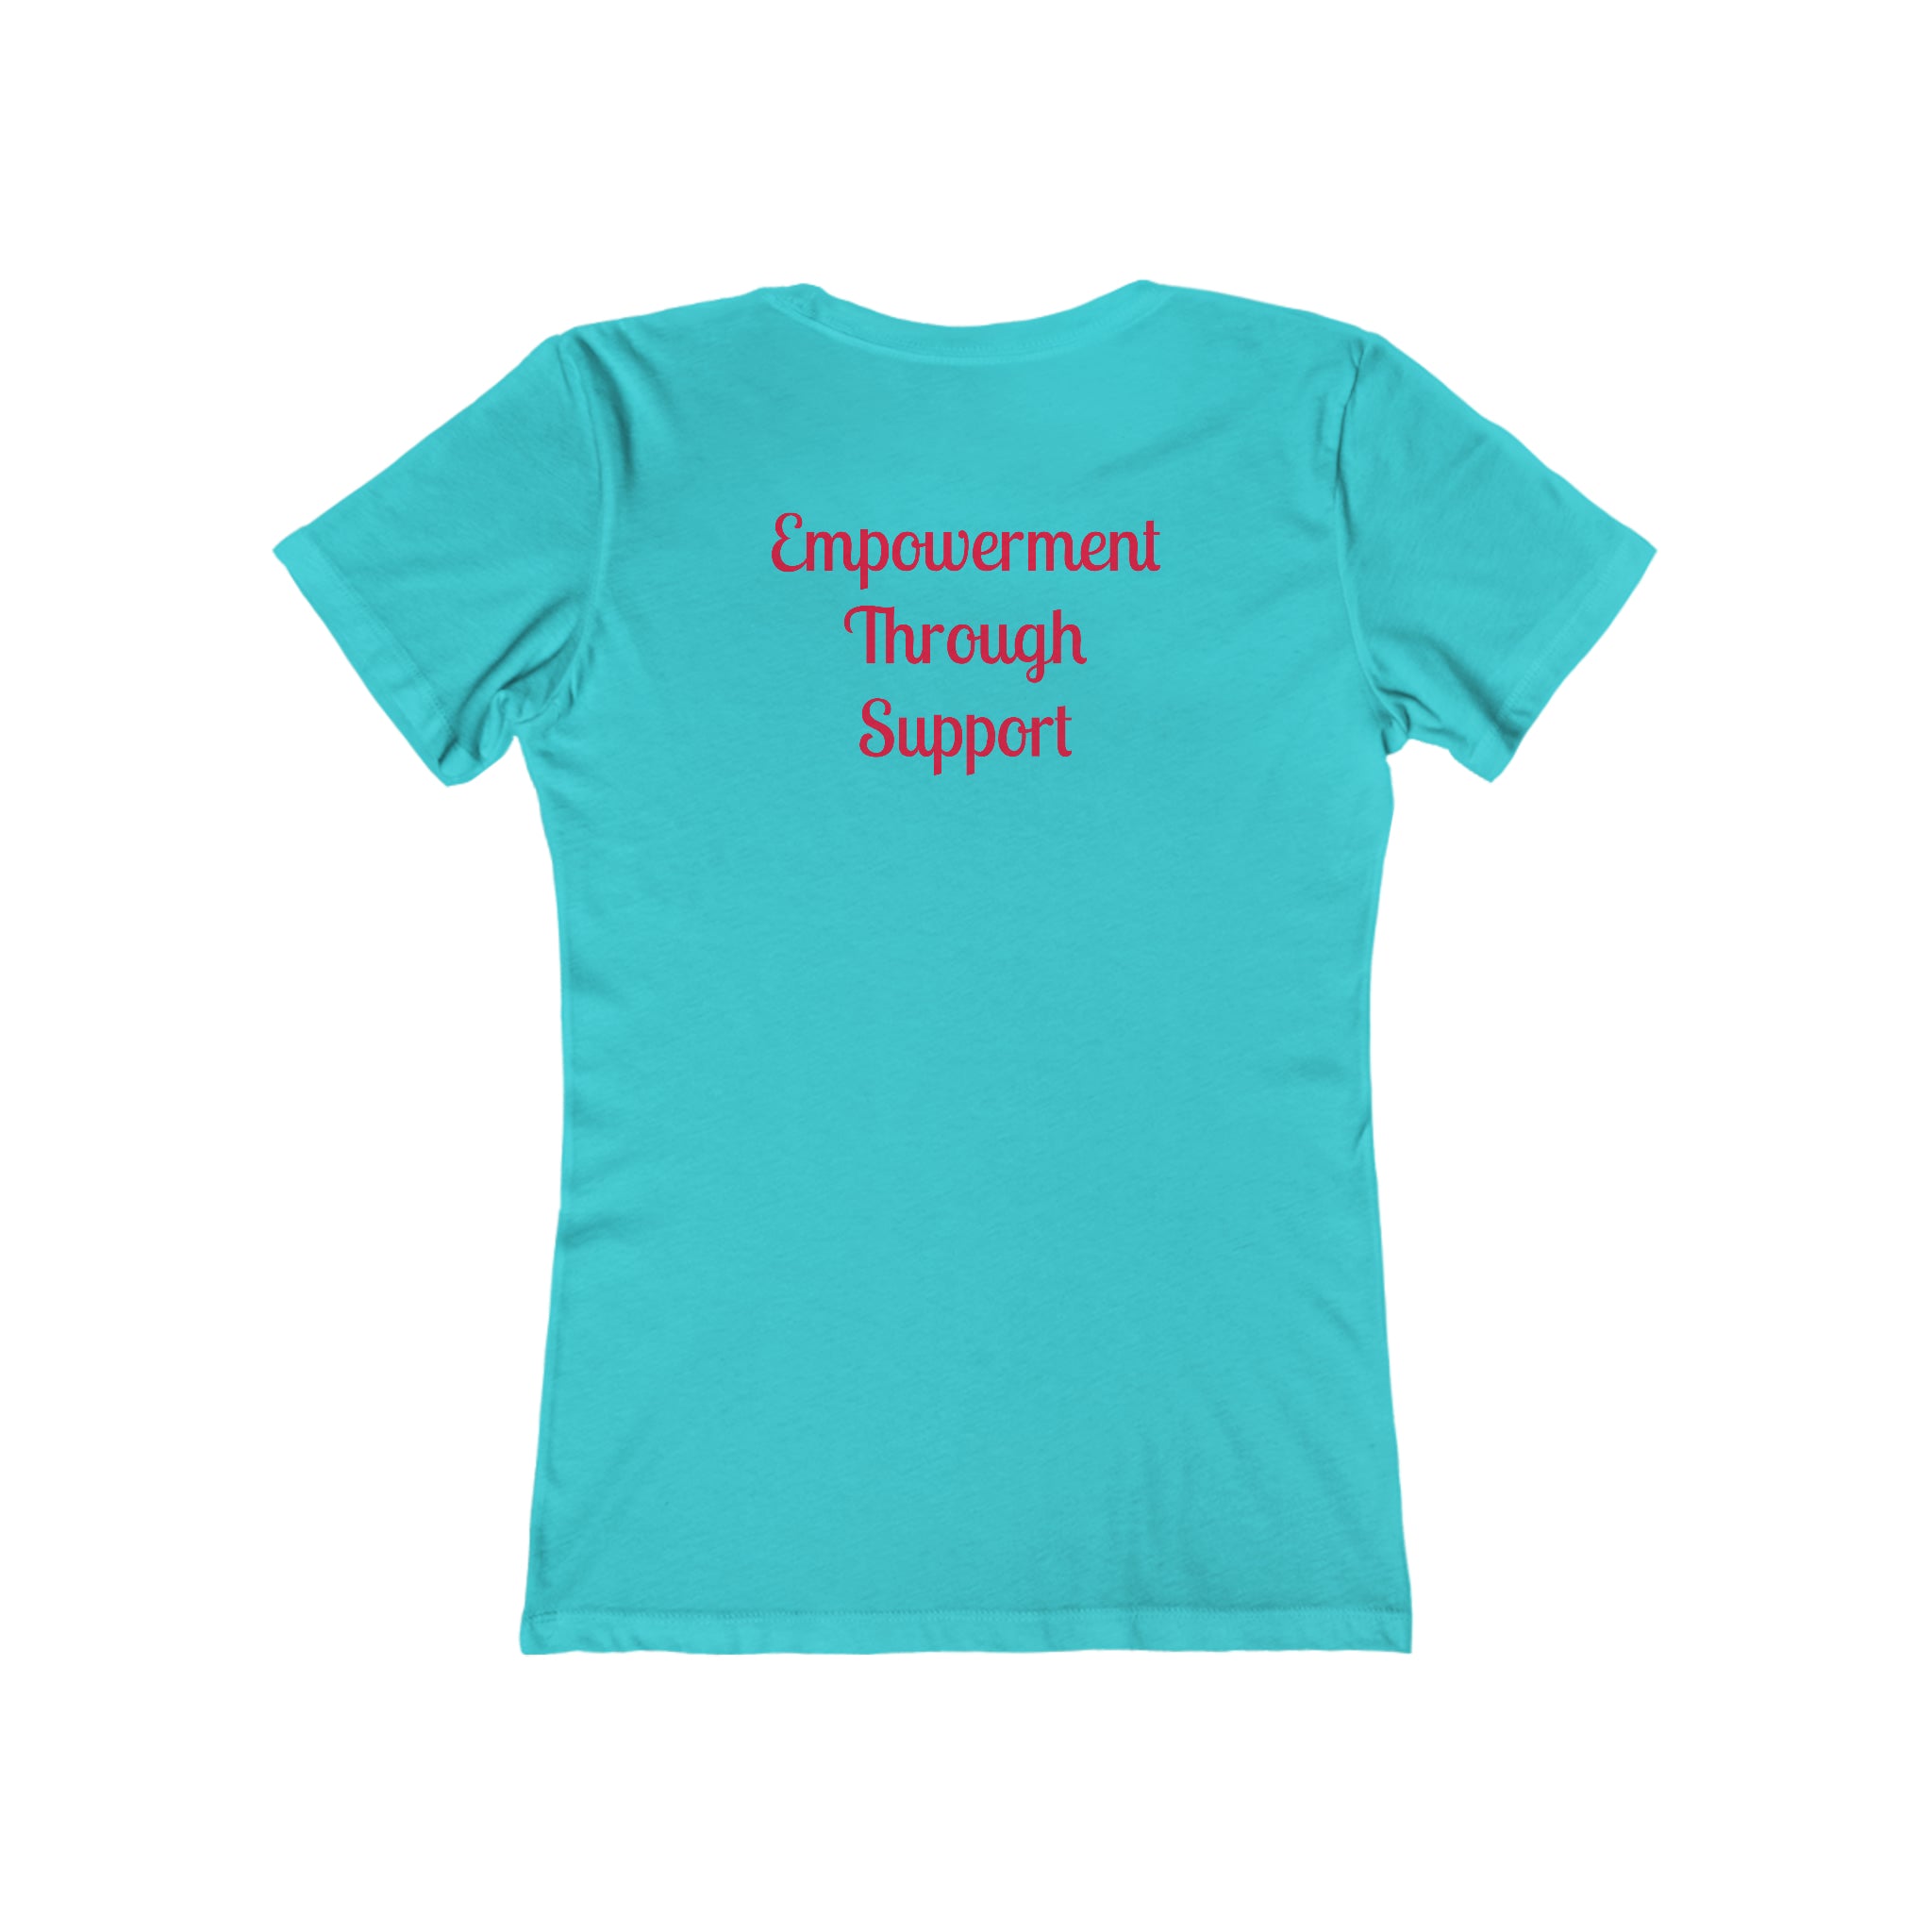 Empowerment Through Support Boyfriend Tee Solid Tahiti Blue Awareness Break the Stigma Mental Health Support Pledge Donation slim fit shirt Tee women shirt T-Shirt 3846750420948365537_2048_28642533-940c-41cc-9b07-436aababc23f Printify